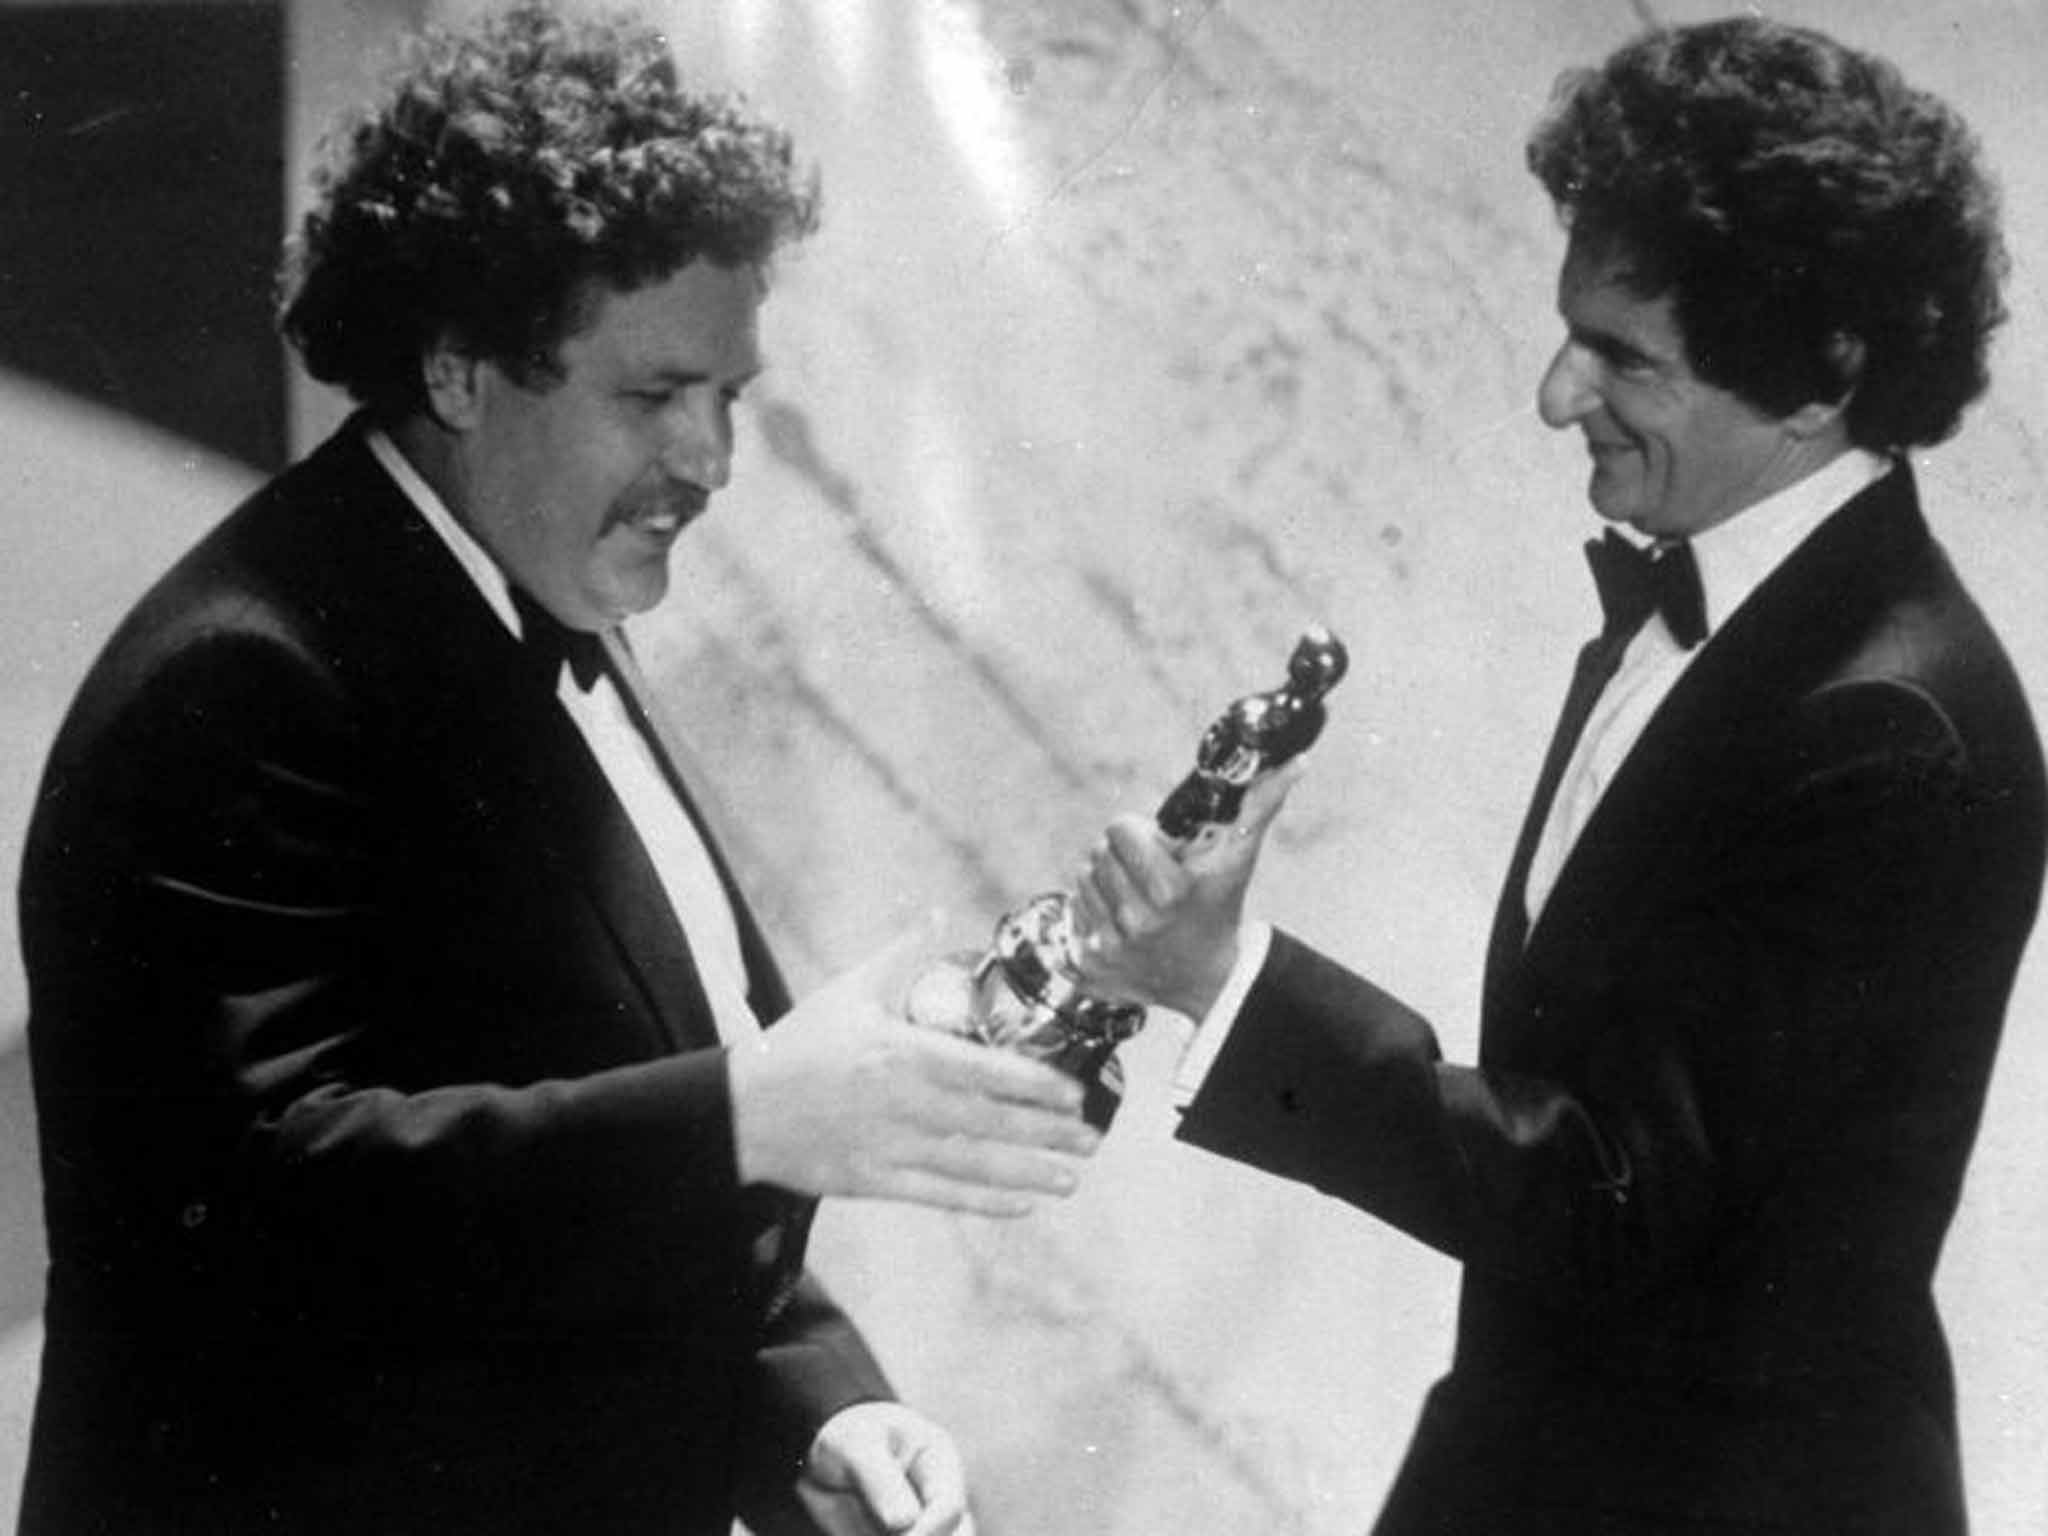 Welland accepts his Oscar for Best Original Screenplay from the novelist Jerzy Kosinski in 1982